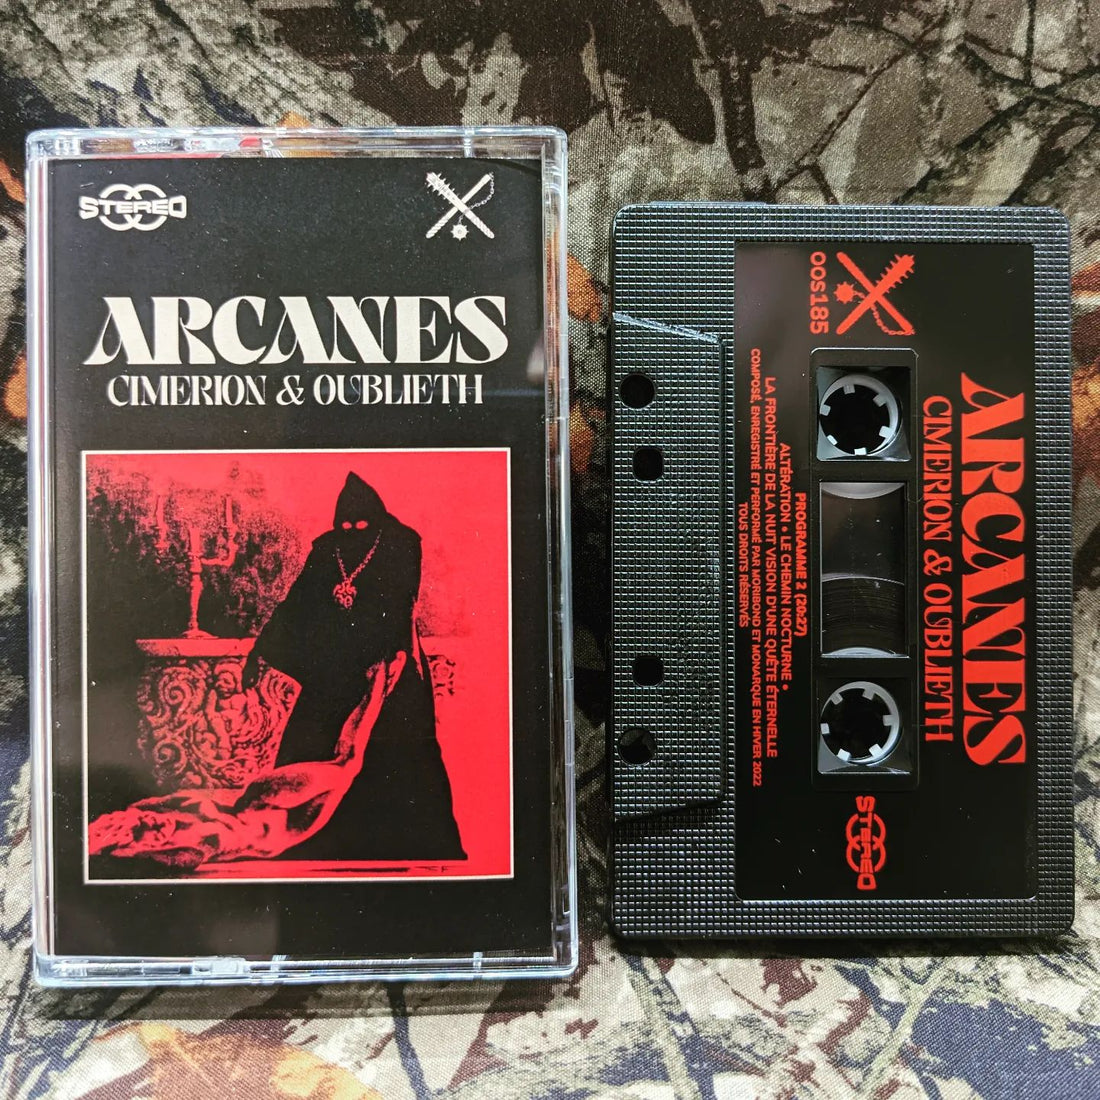 Final release announcement for Friday 11/11/22: OUBLIETH & CIMERION "Arcanes" cassette tape (/250)